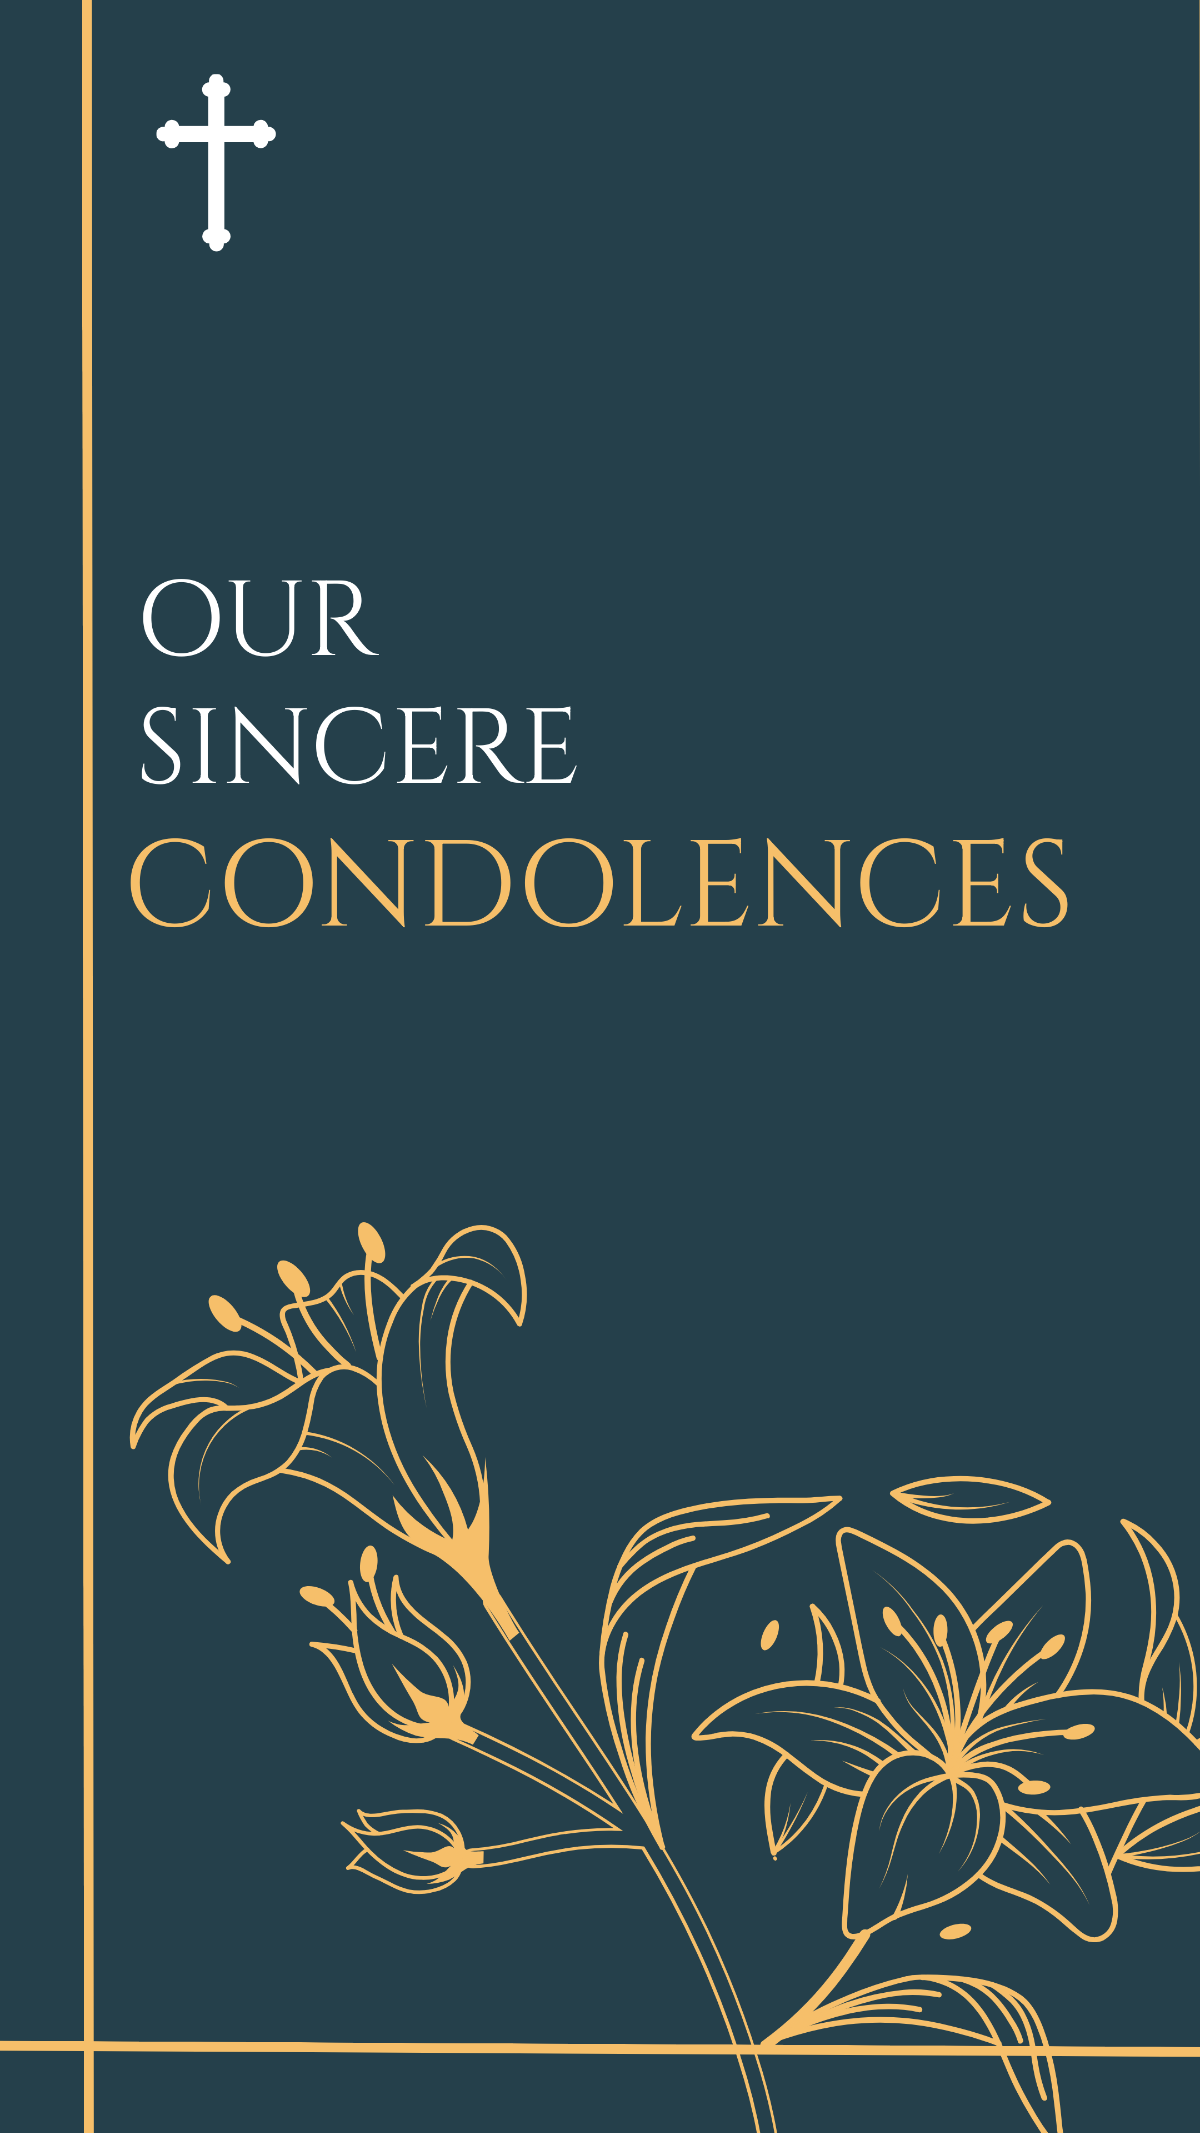 Digital Condolence Card